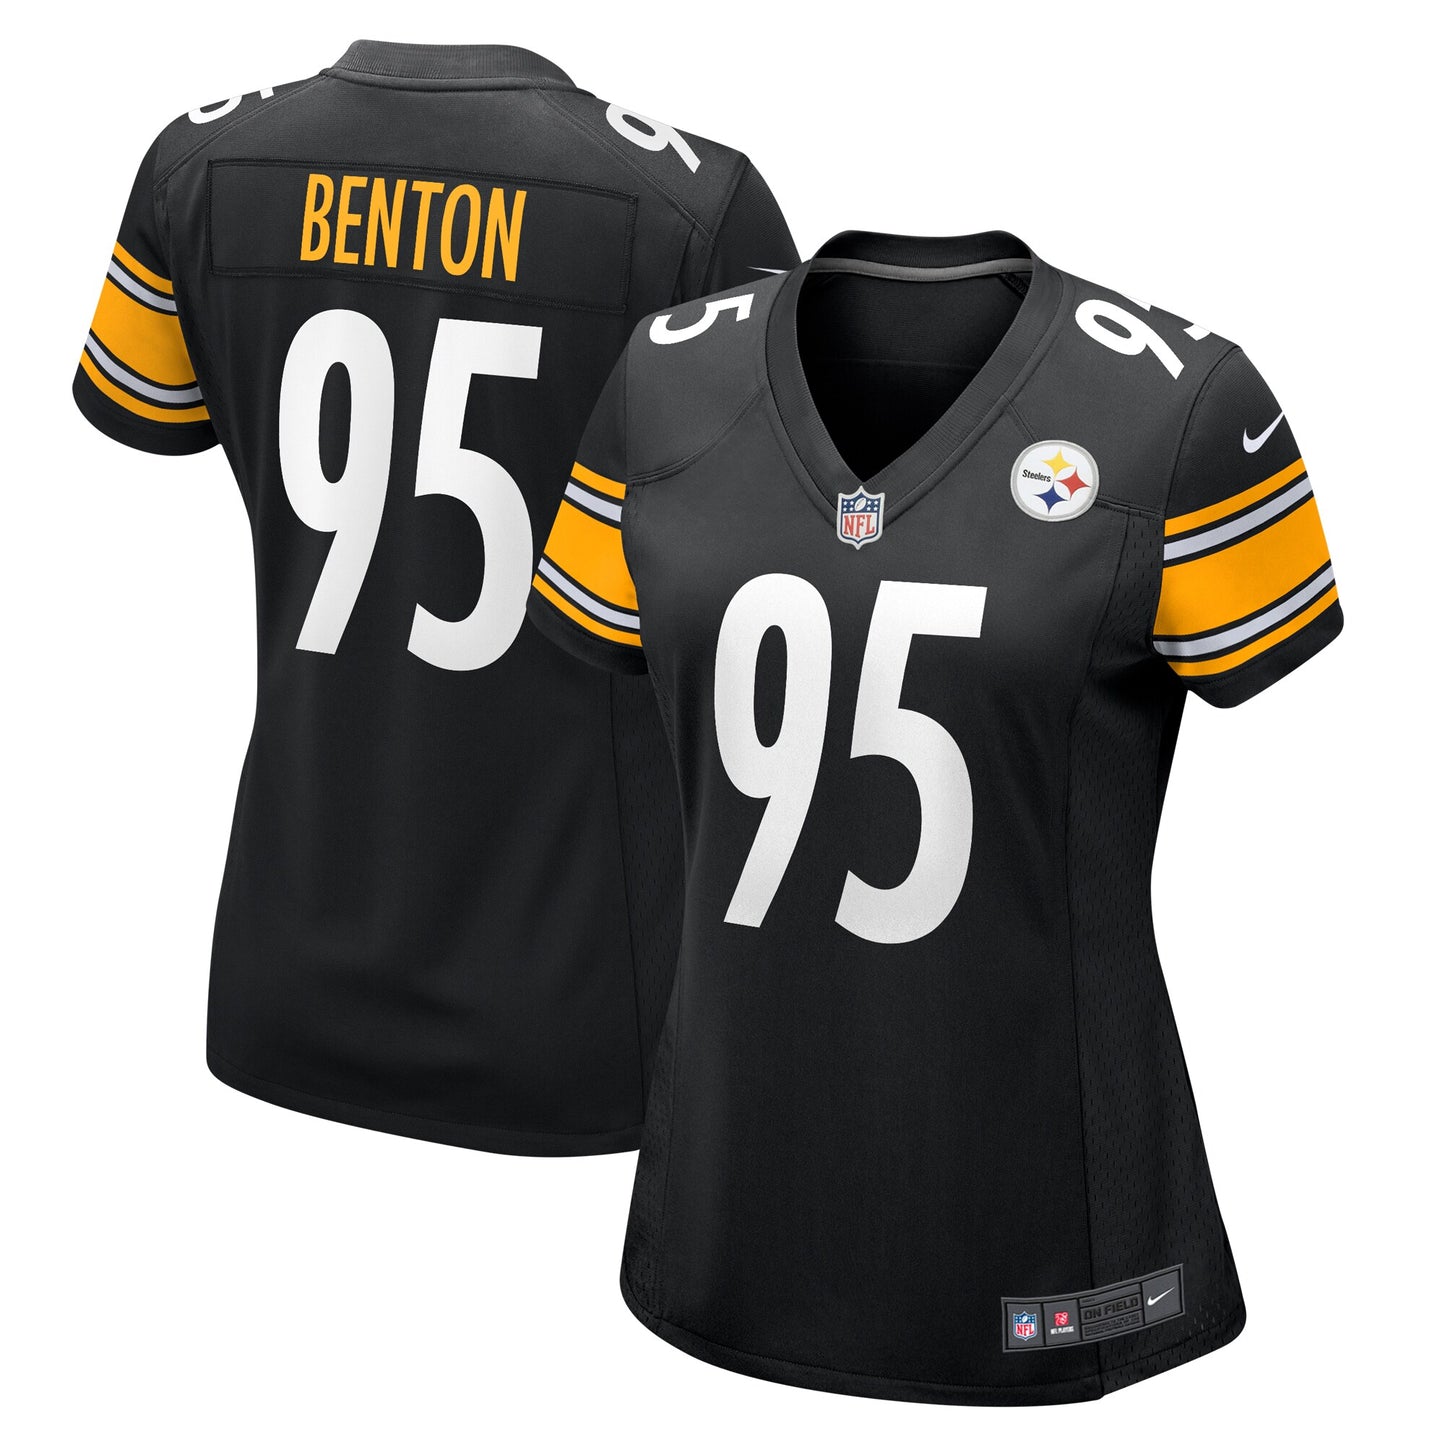 Keeanu Benton Pittsburgh Steelers Nike Women's Team Game Jersey - Black